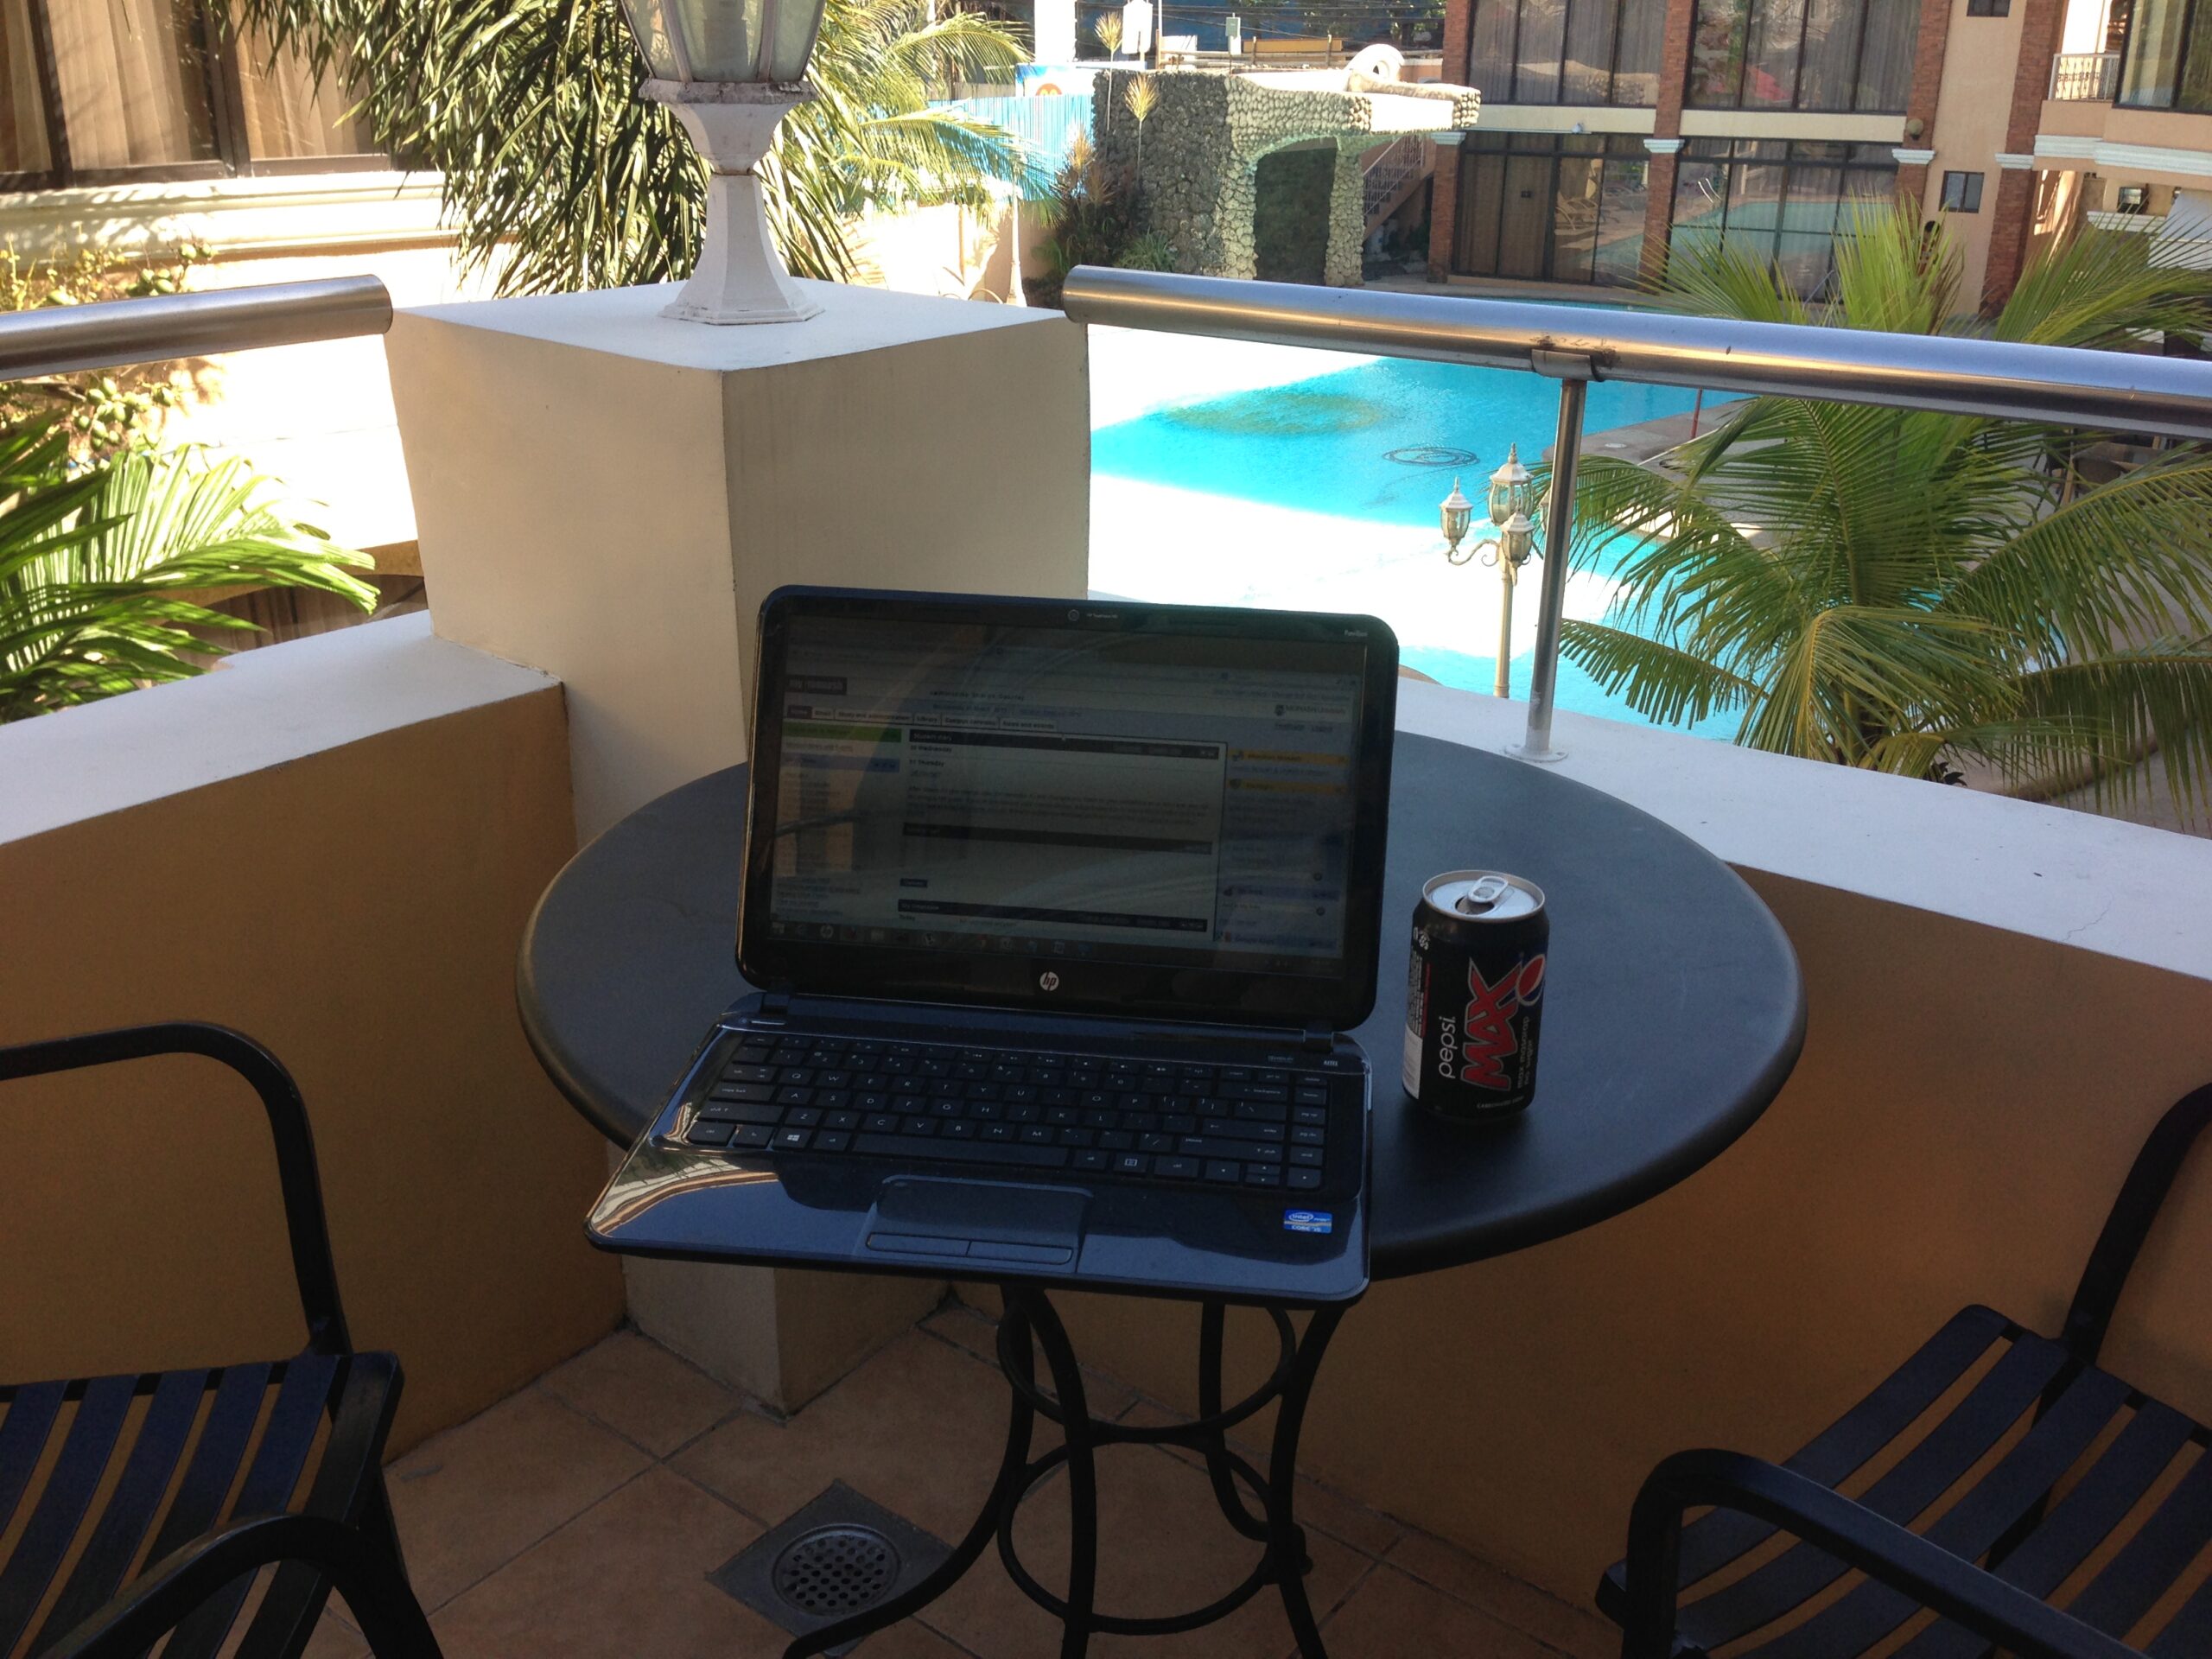 Remote work set up on balcony overlooking pool